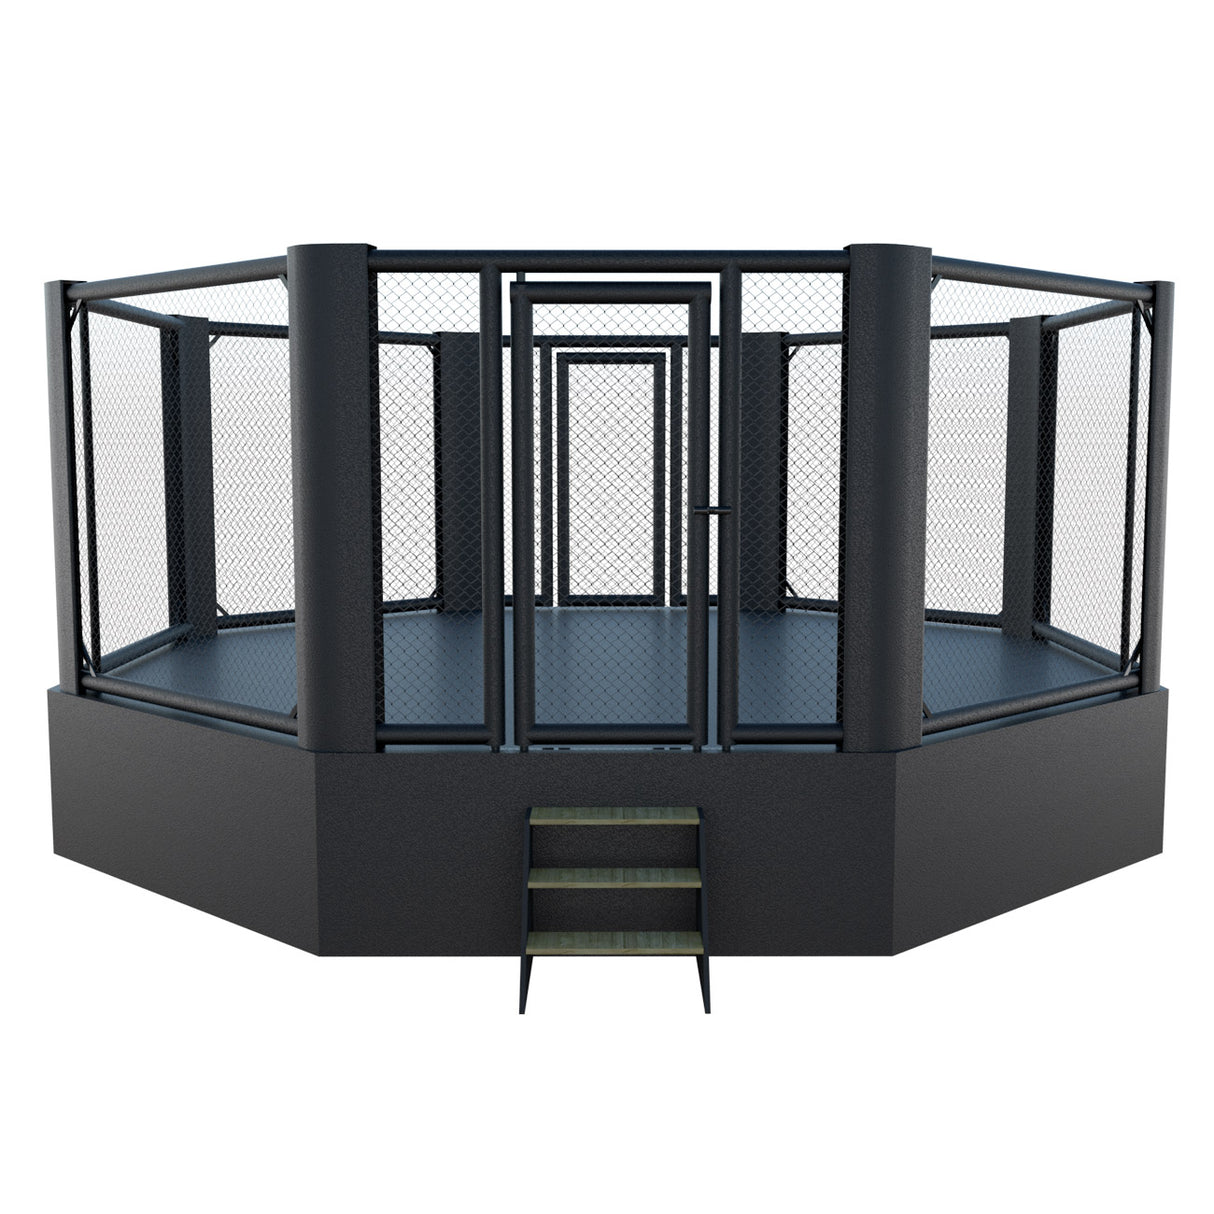 Cage de compétition MMA - comme illustré, 6V, 7V